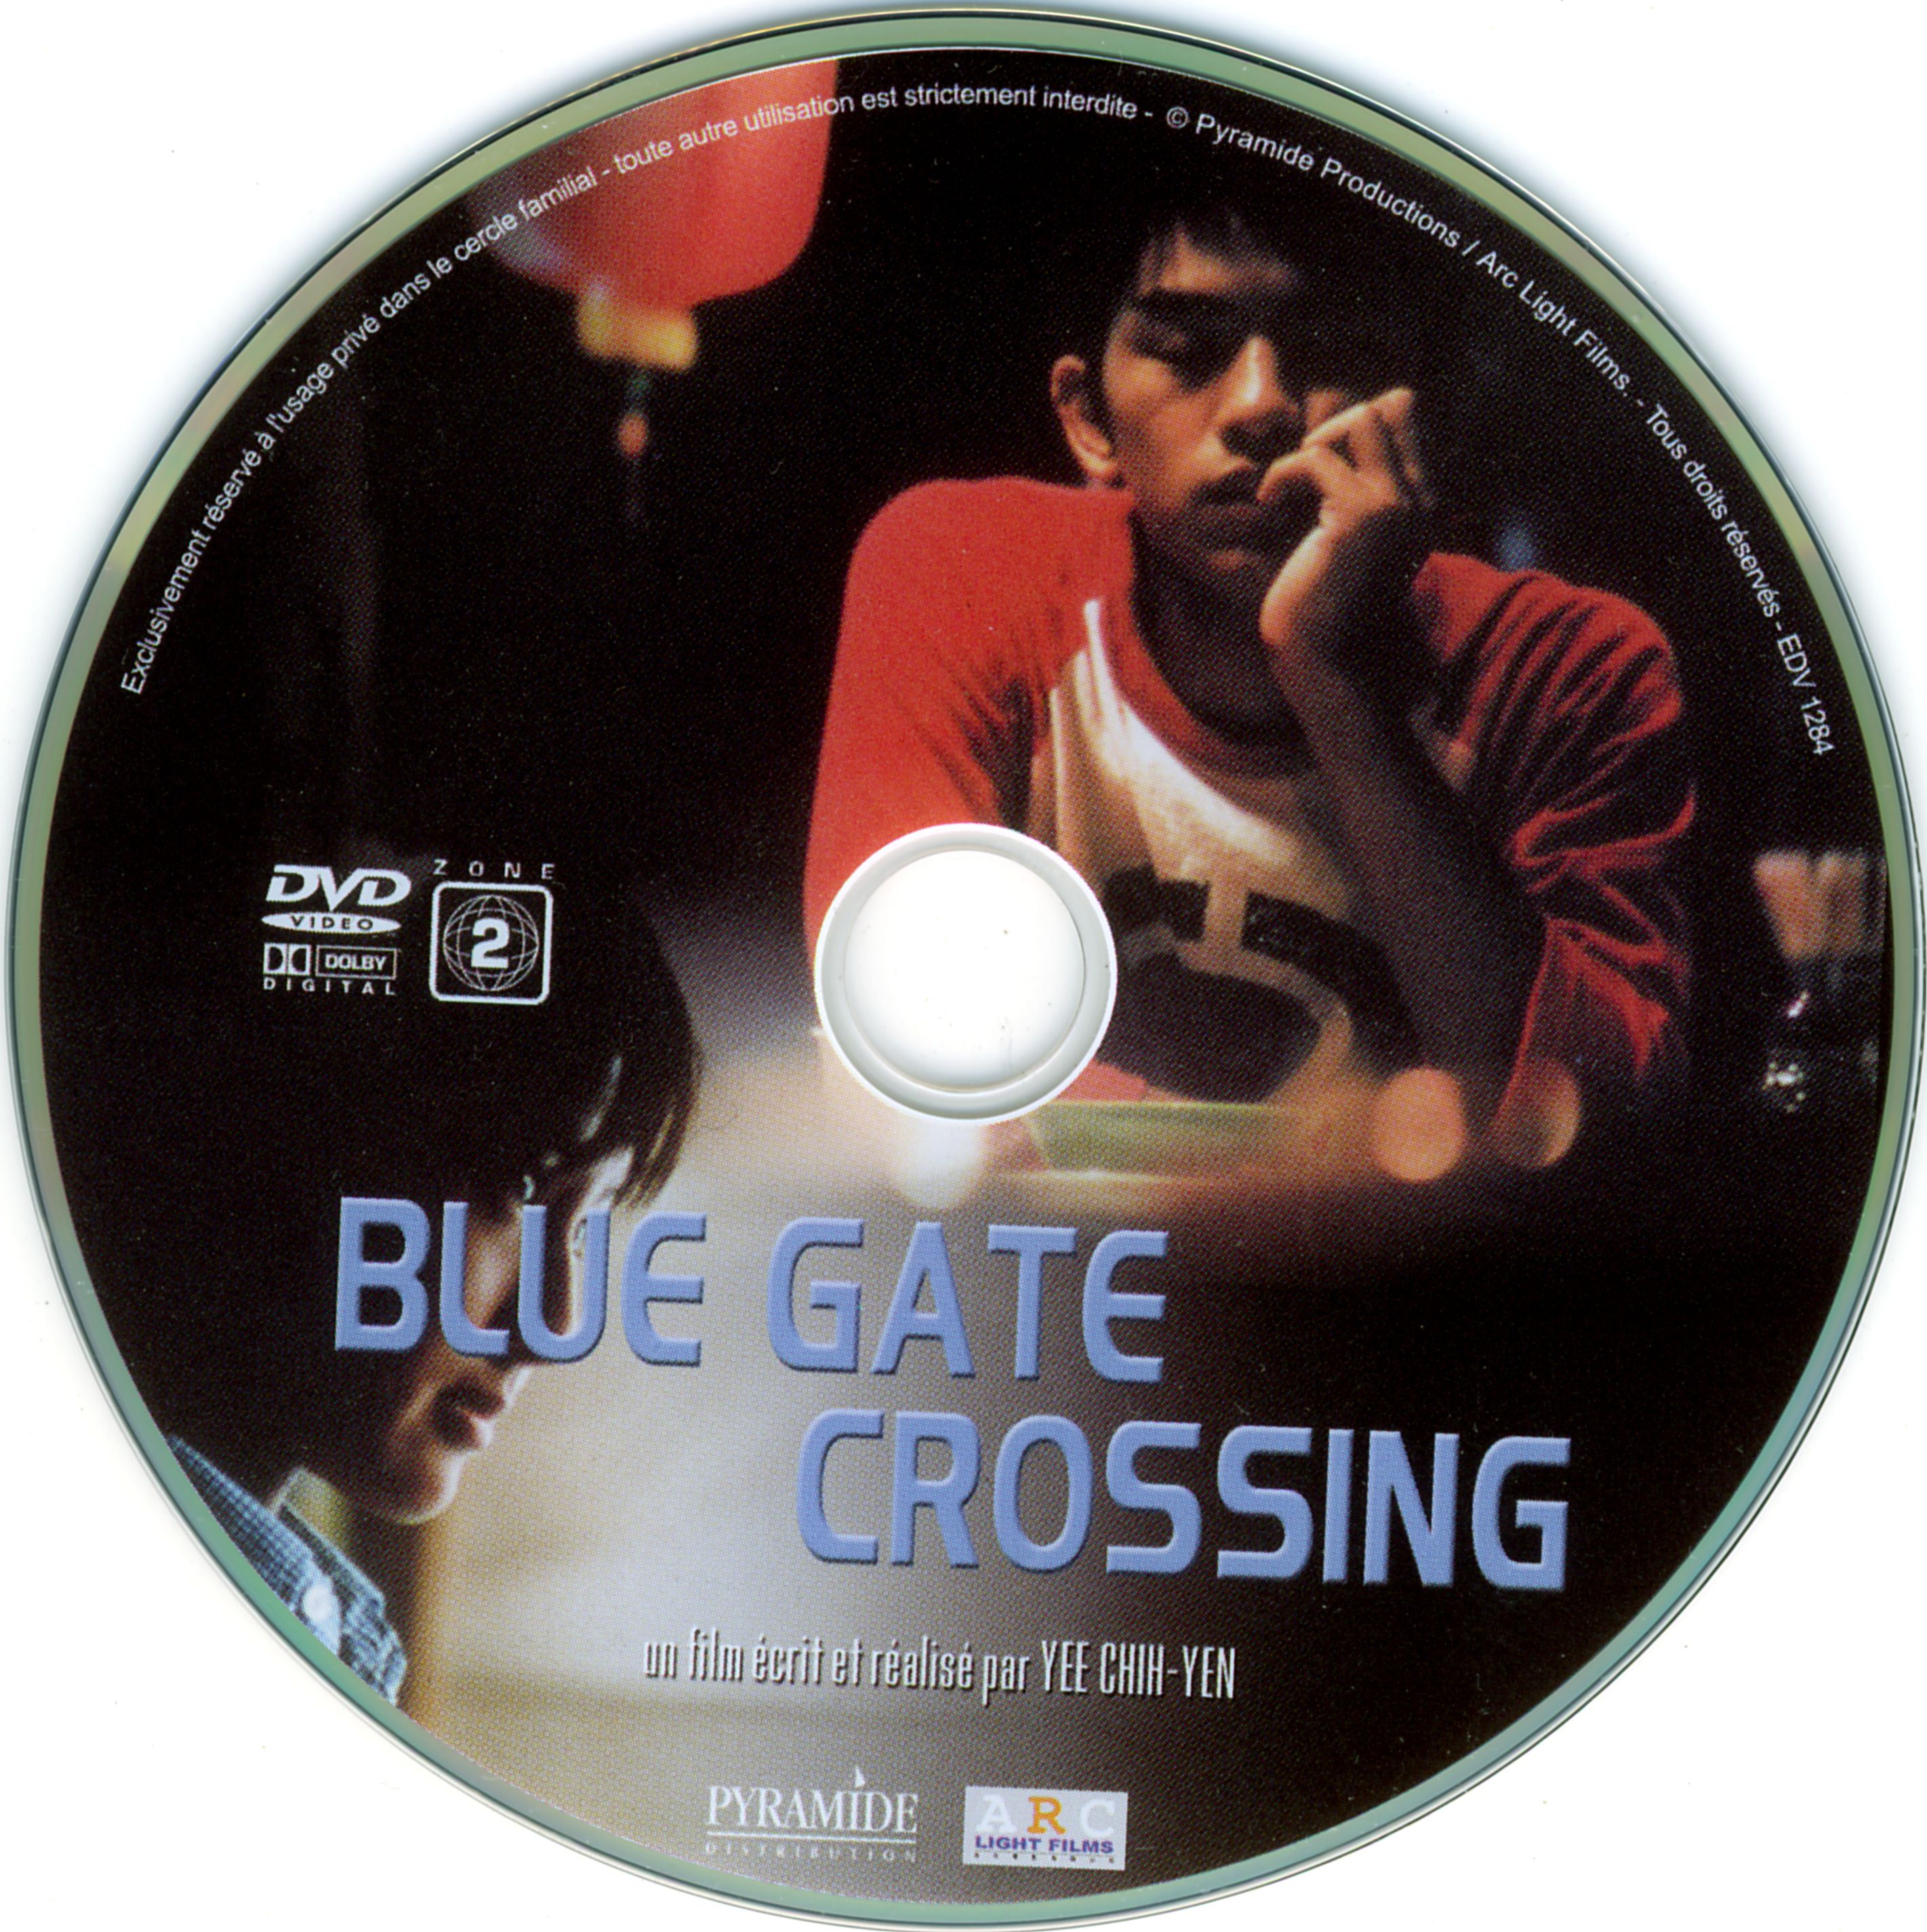 Blue gate crossnig